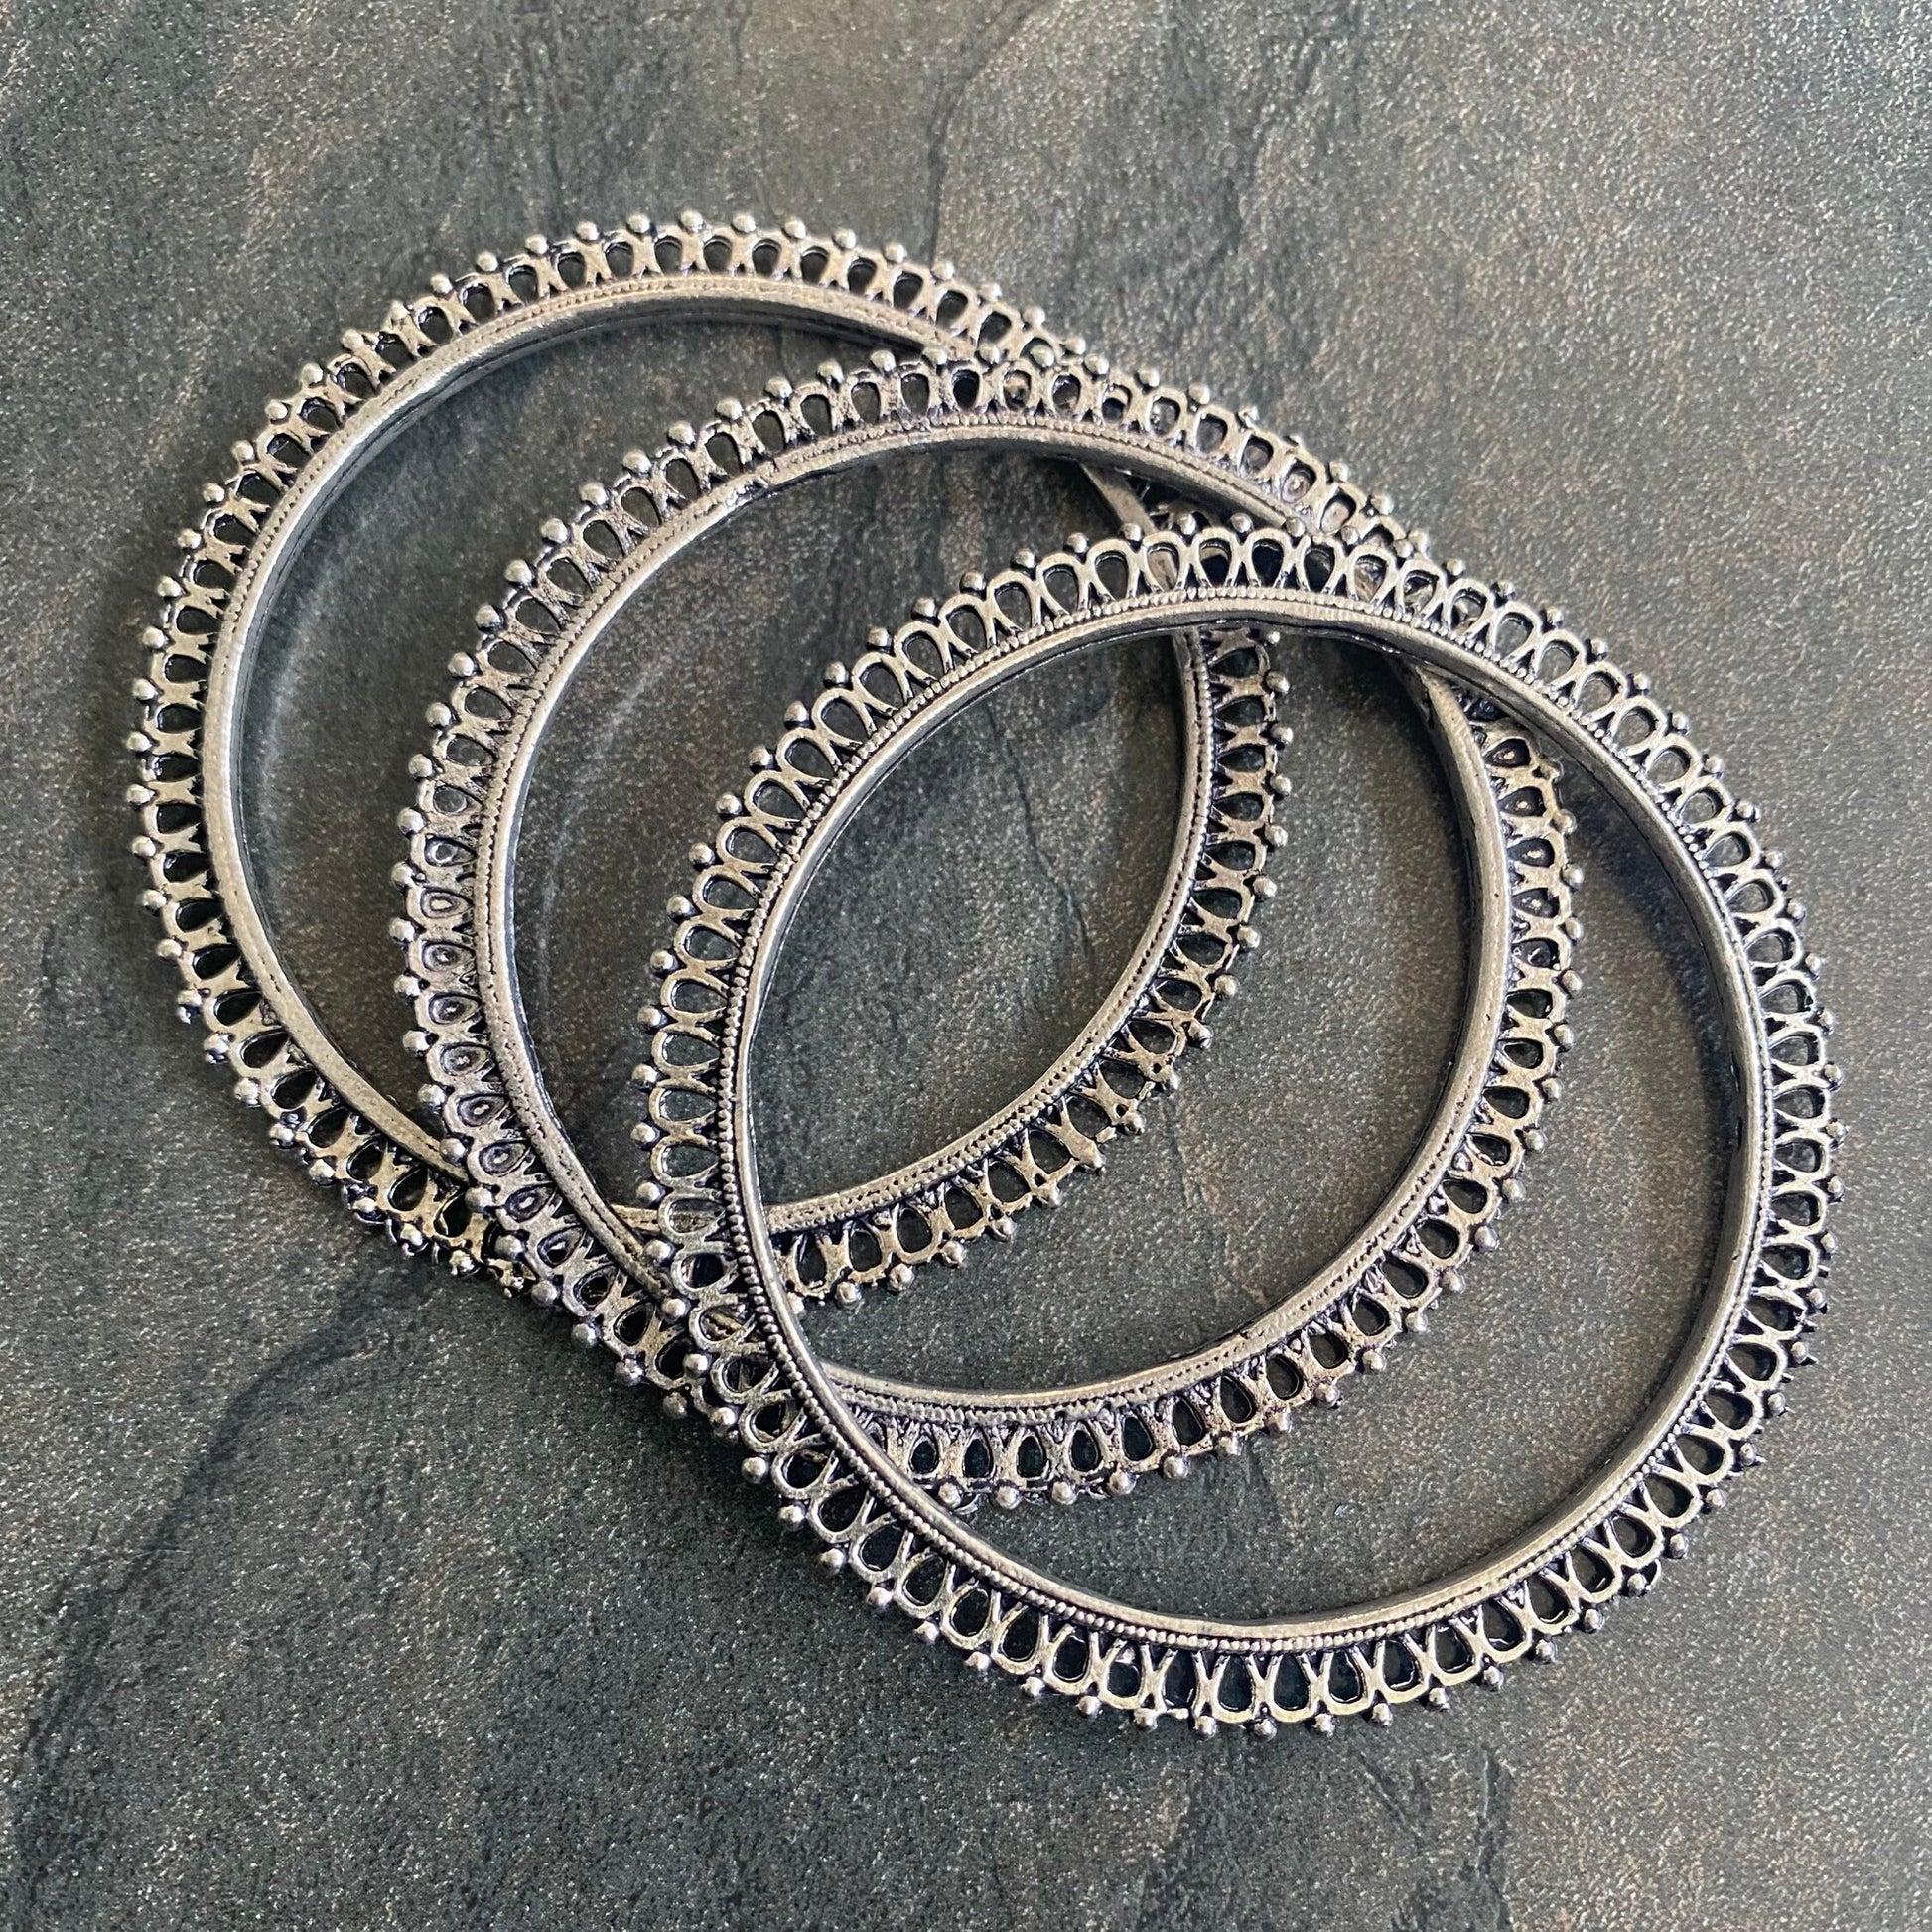 Oxidised Steel Bangle Bracelet For Women, Indian Kada Bangle, Indian Jewelry, Unique Bangle Gift